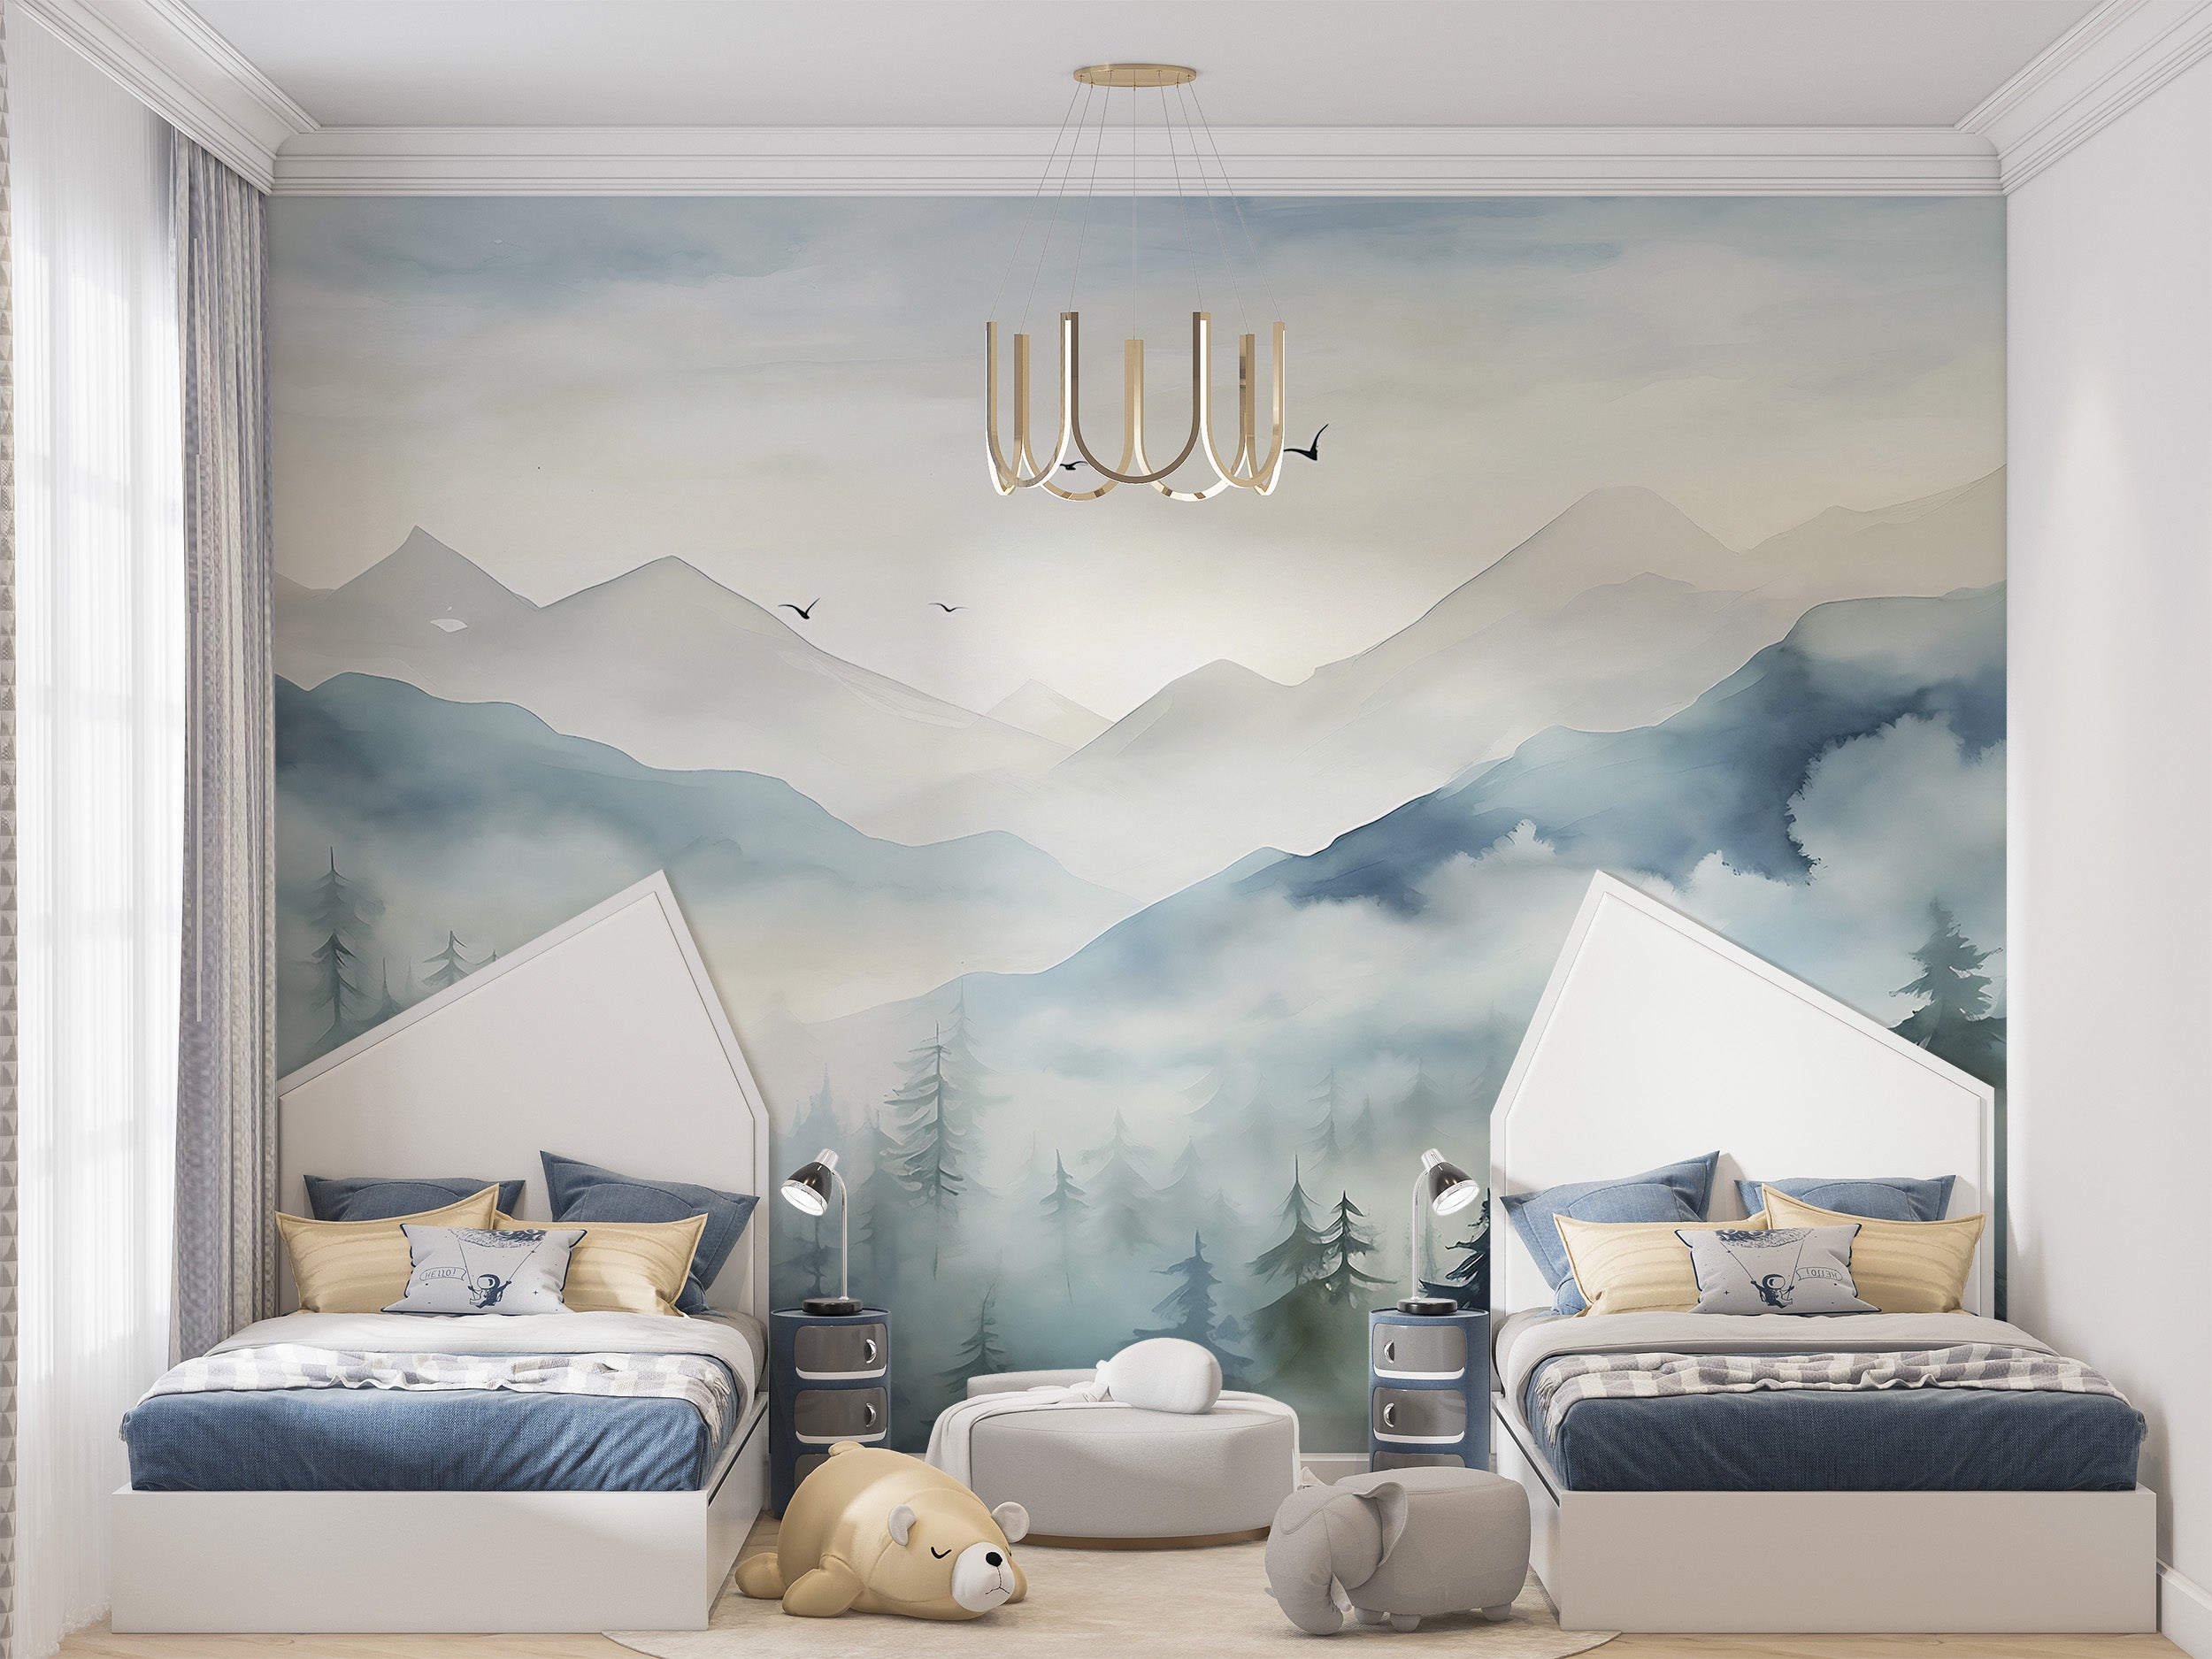 Effortless Application of Dreamy Mountainscape Wallpaper